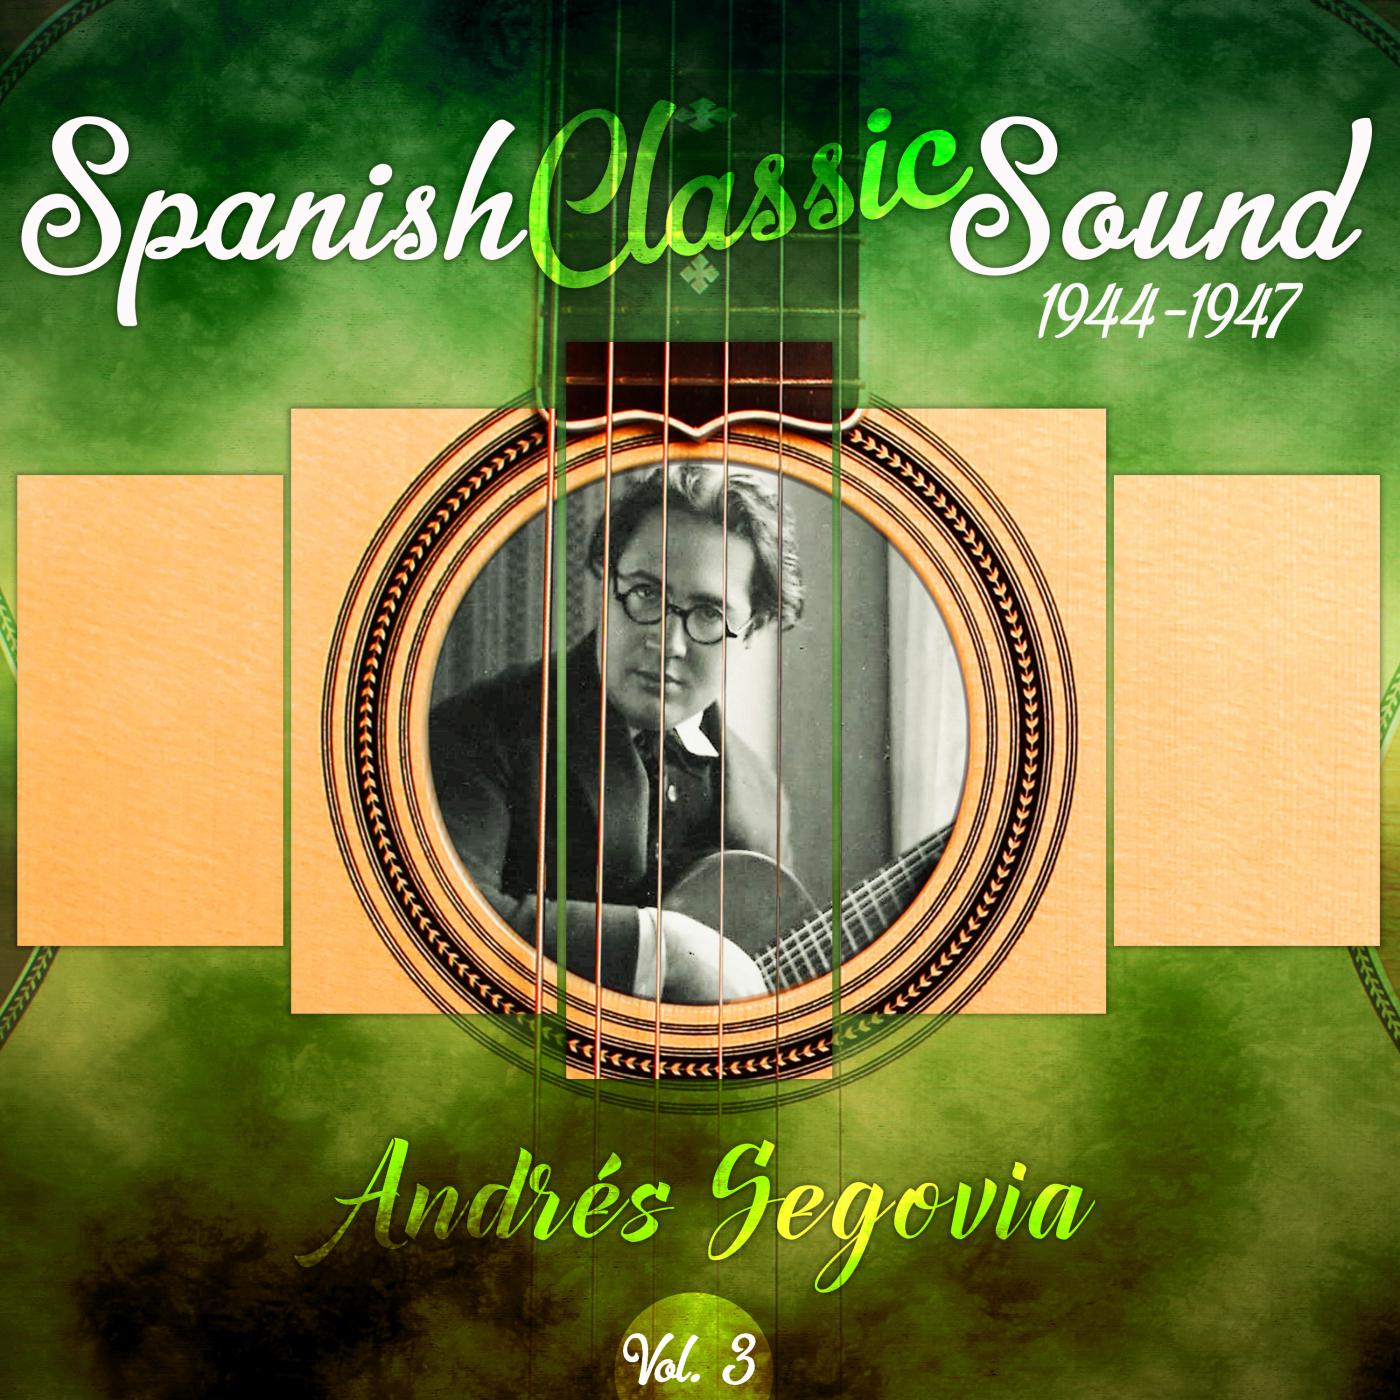 Spanish Classic Sound, Vol. 3 (1944 - 1947)